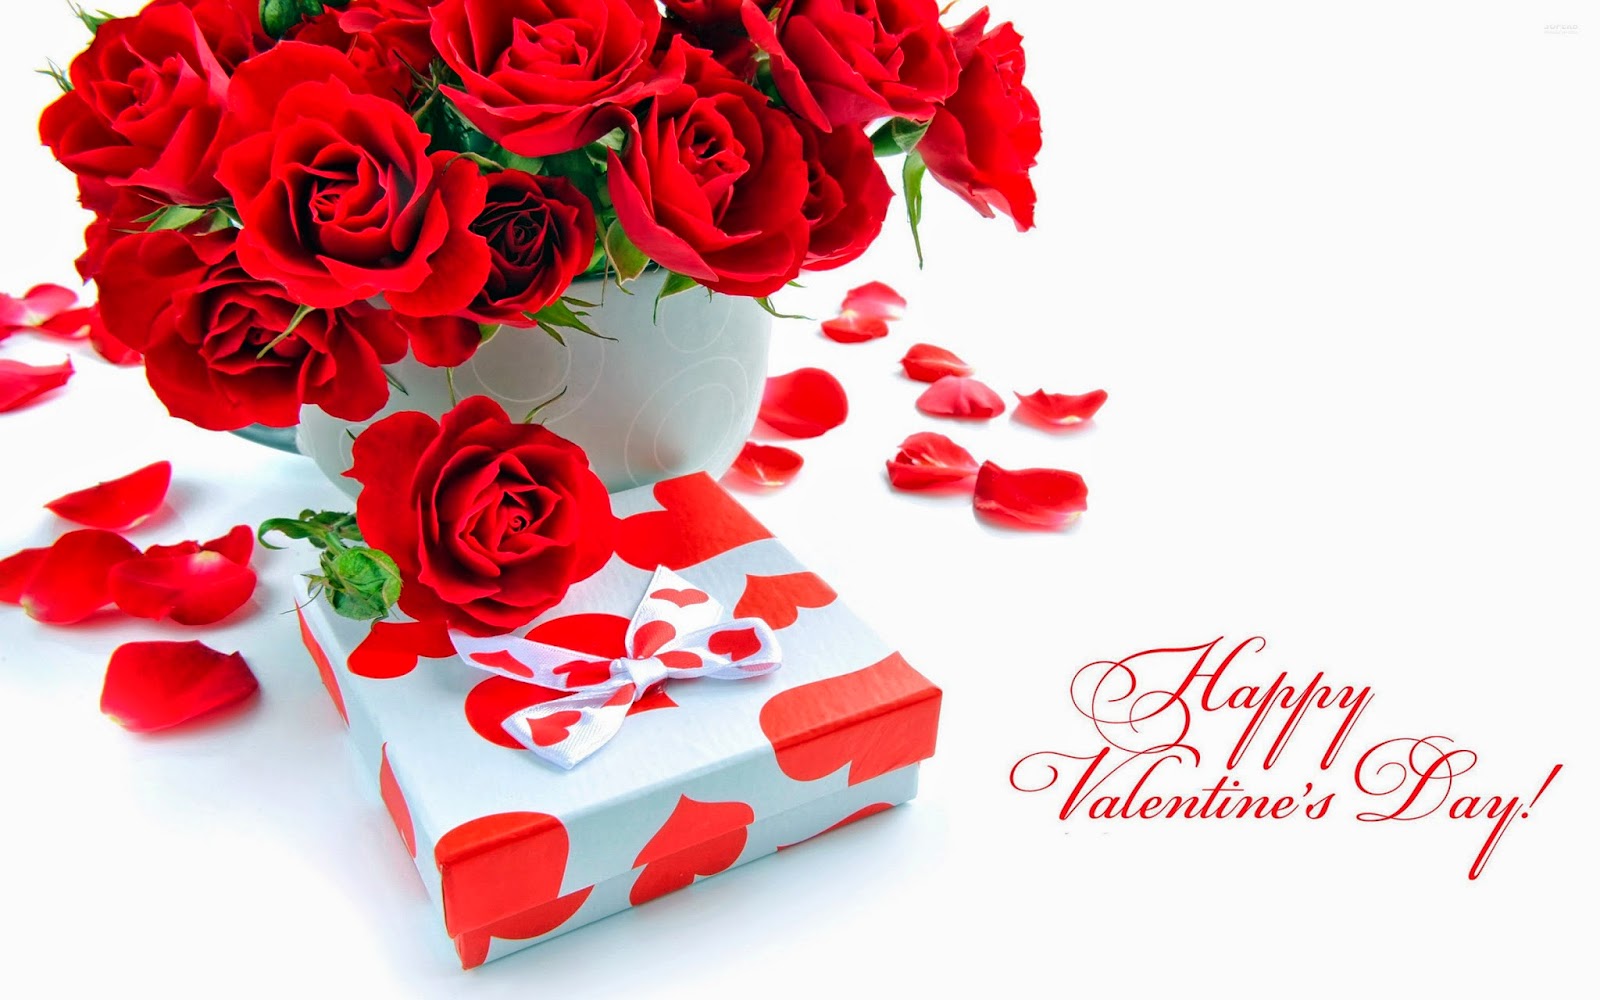 Happy Saint Anti Valentine's Day 2020 Wishes Quotes Image Whatsapp Status Dp